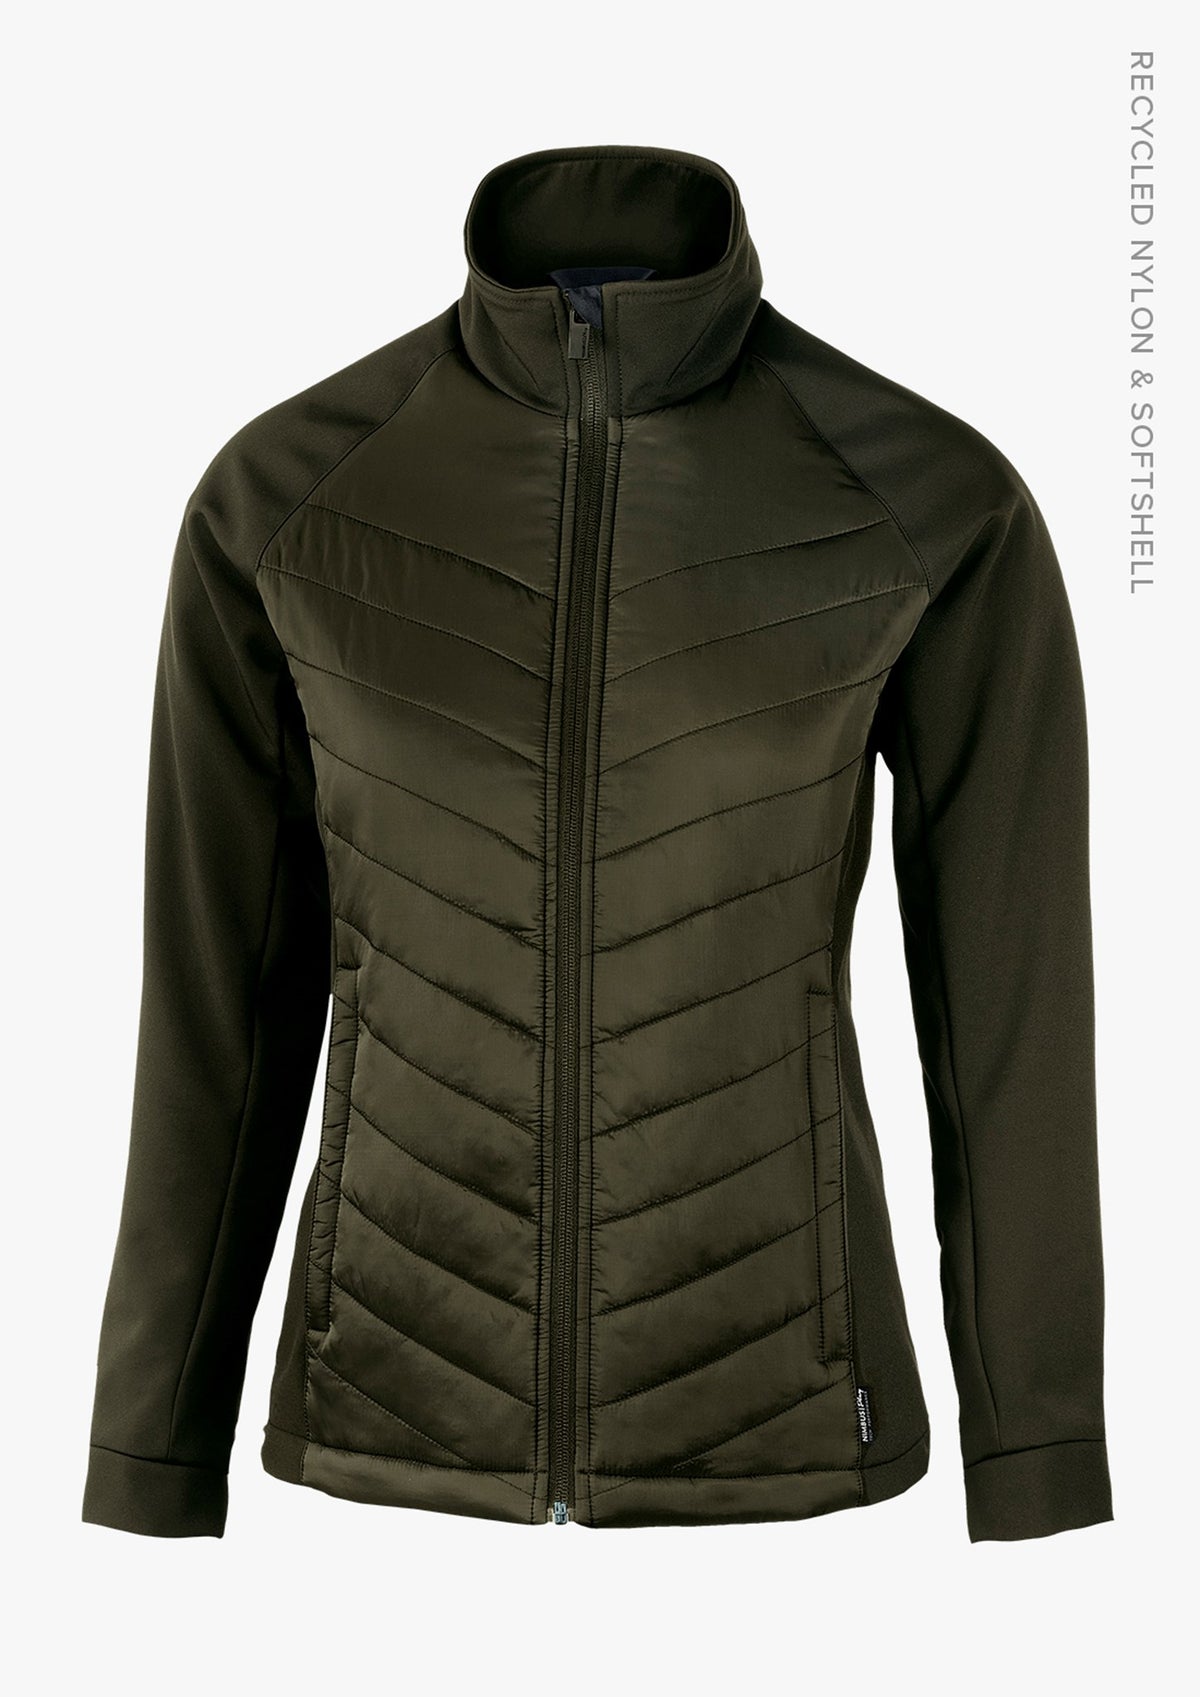 Jackets & coats | | Nimbus fashion Premium corporate